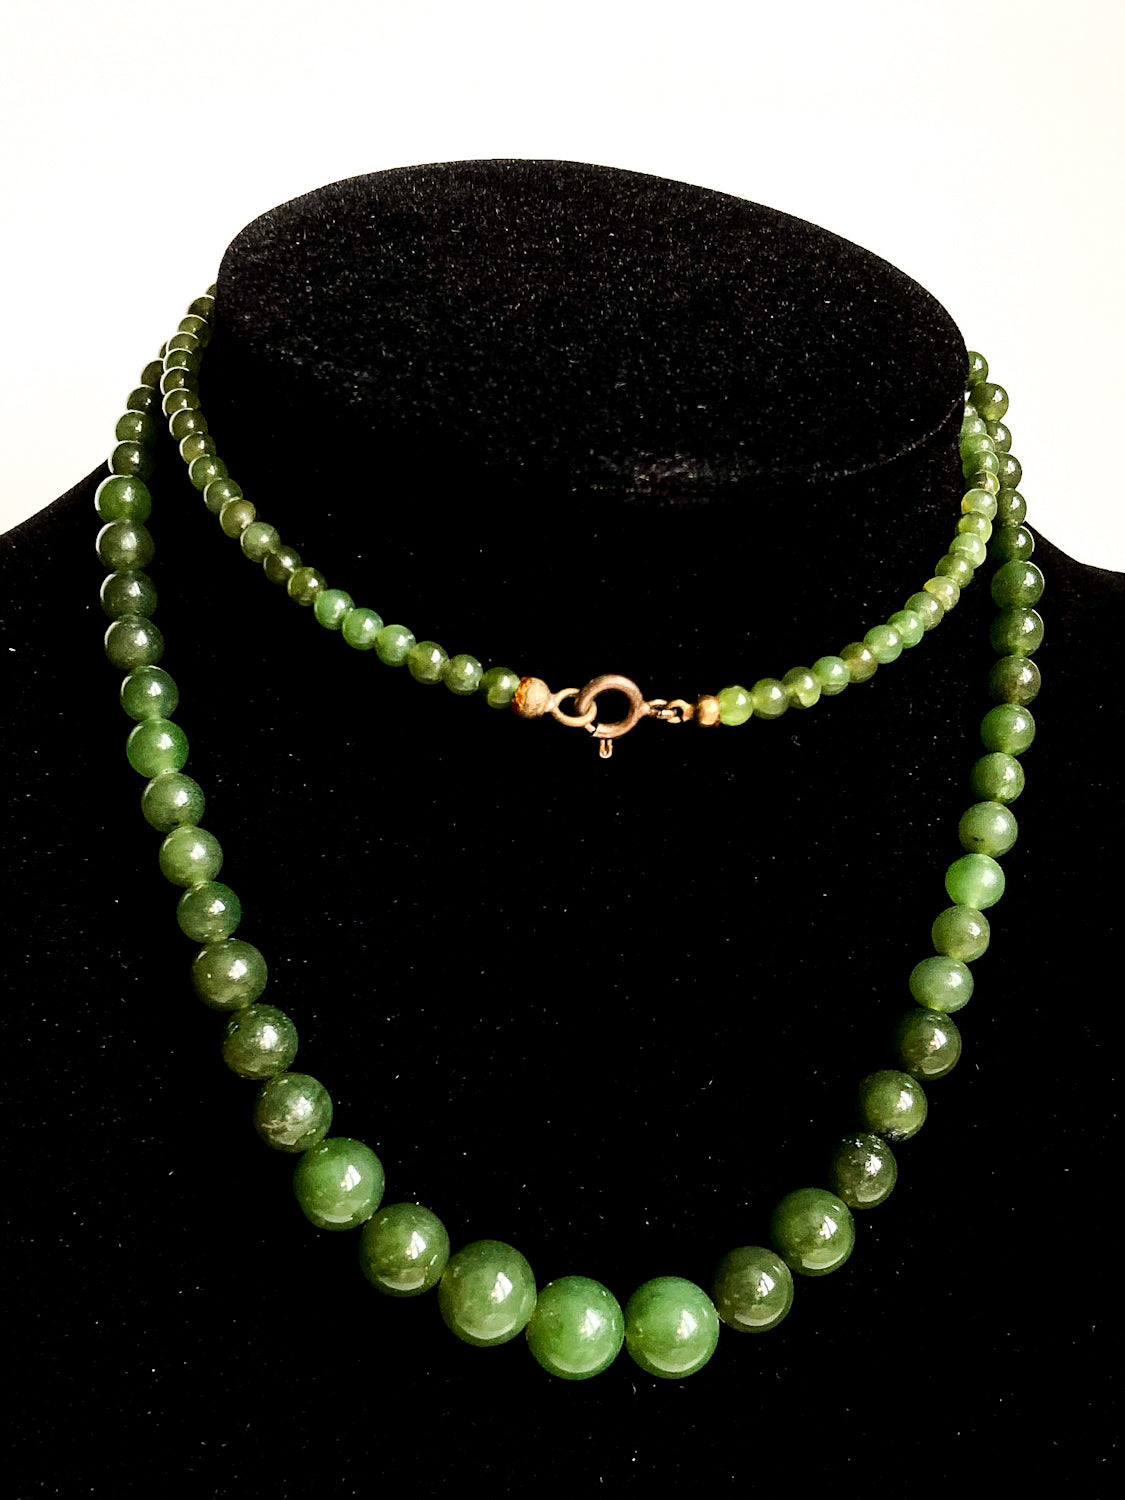 Vintage Graduated Green Nephrite Stone Bead Elongated Necklace doubled on black velvet form